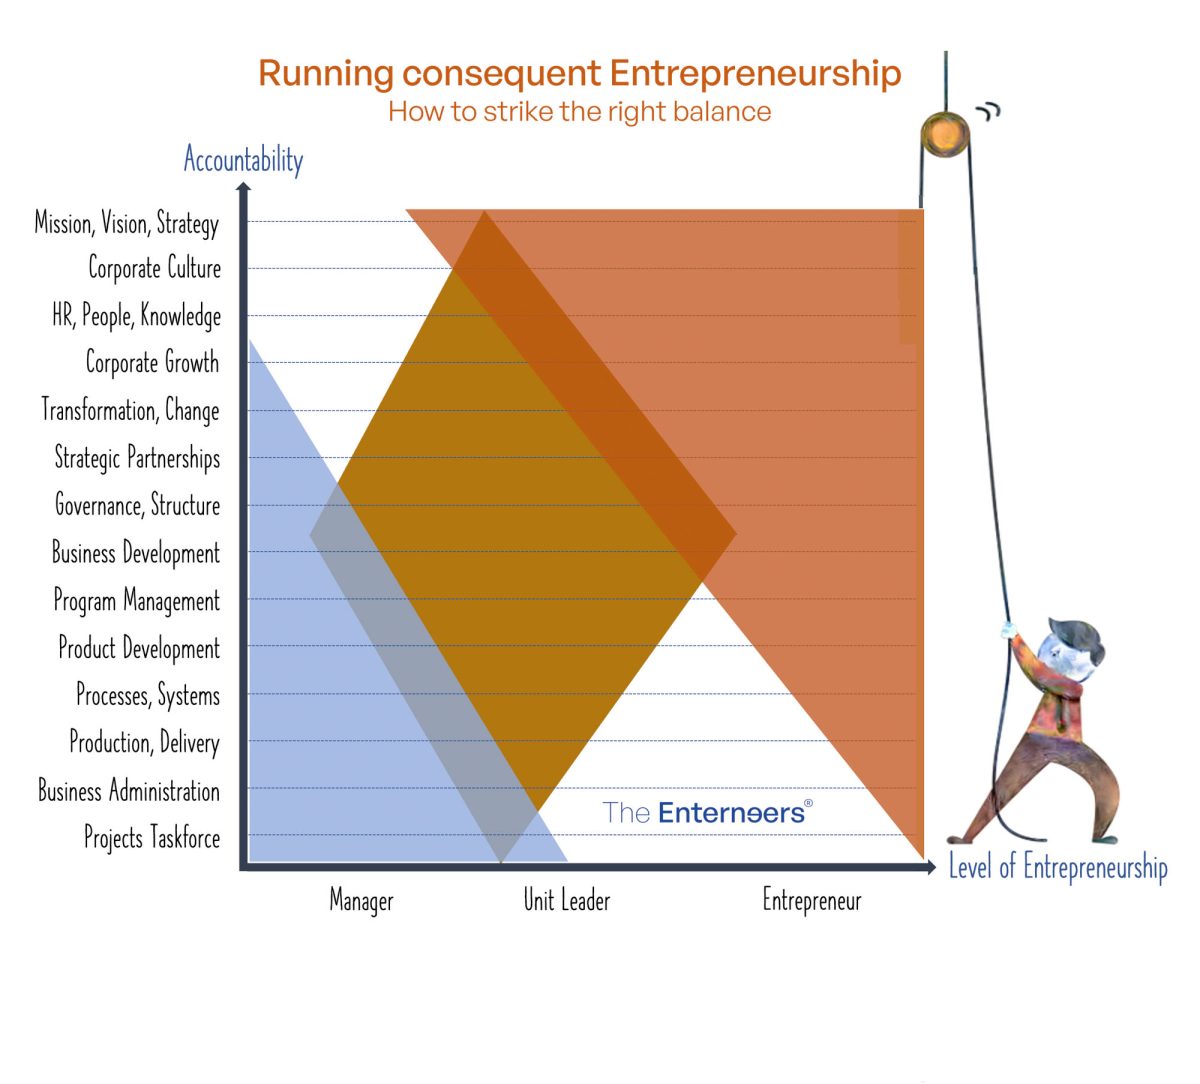 About Entrepreneurship, Leadership and Management